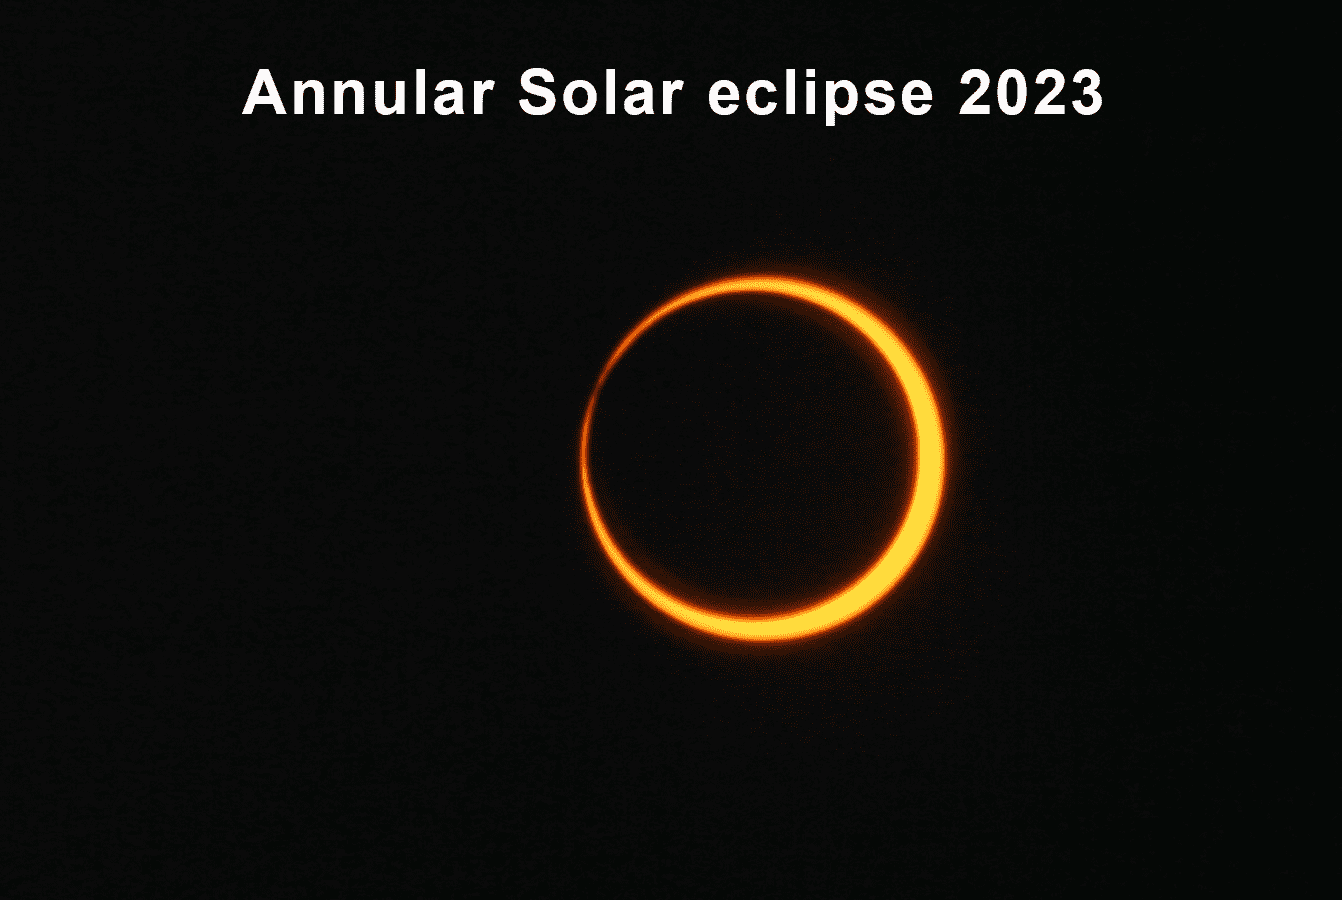 Annular solar eclipse 2023